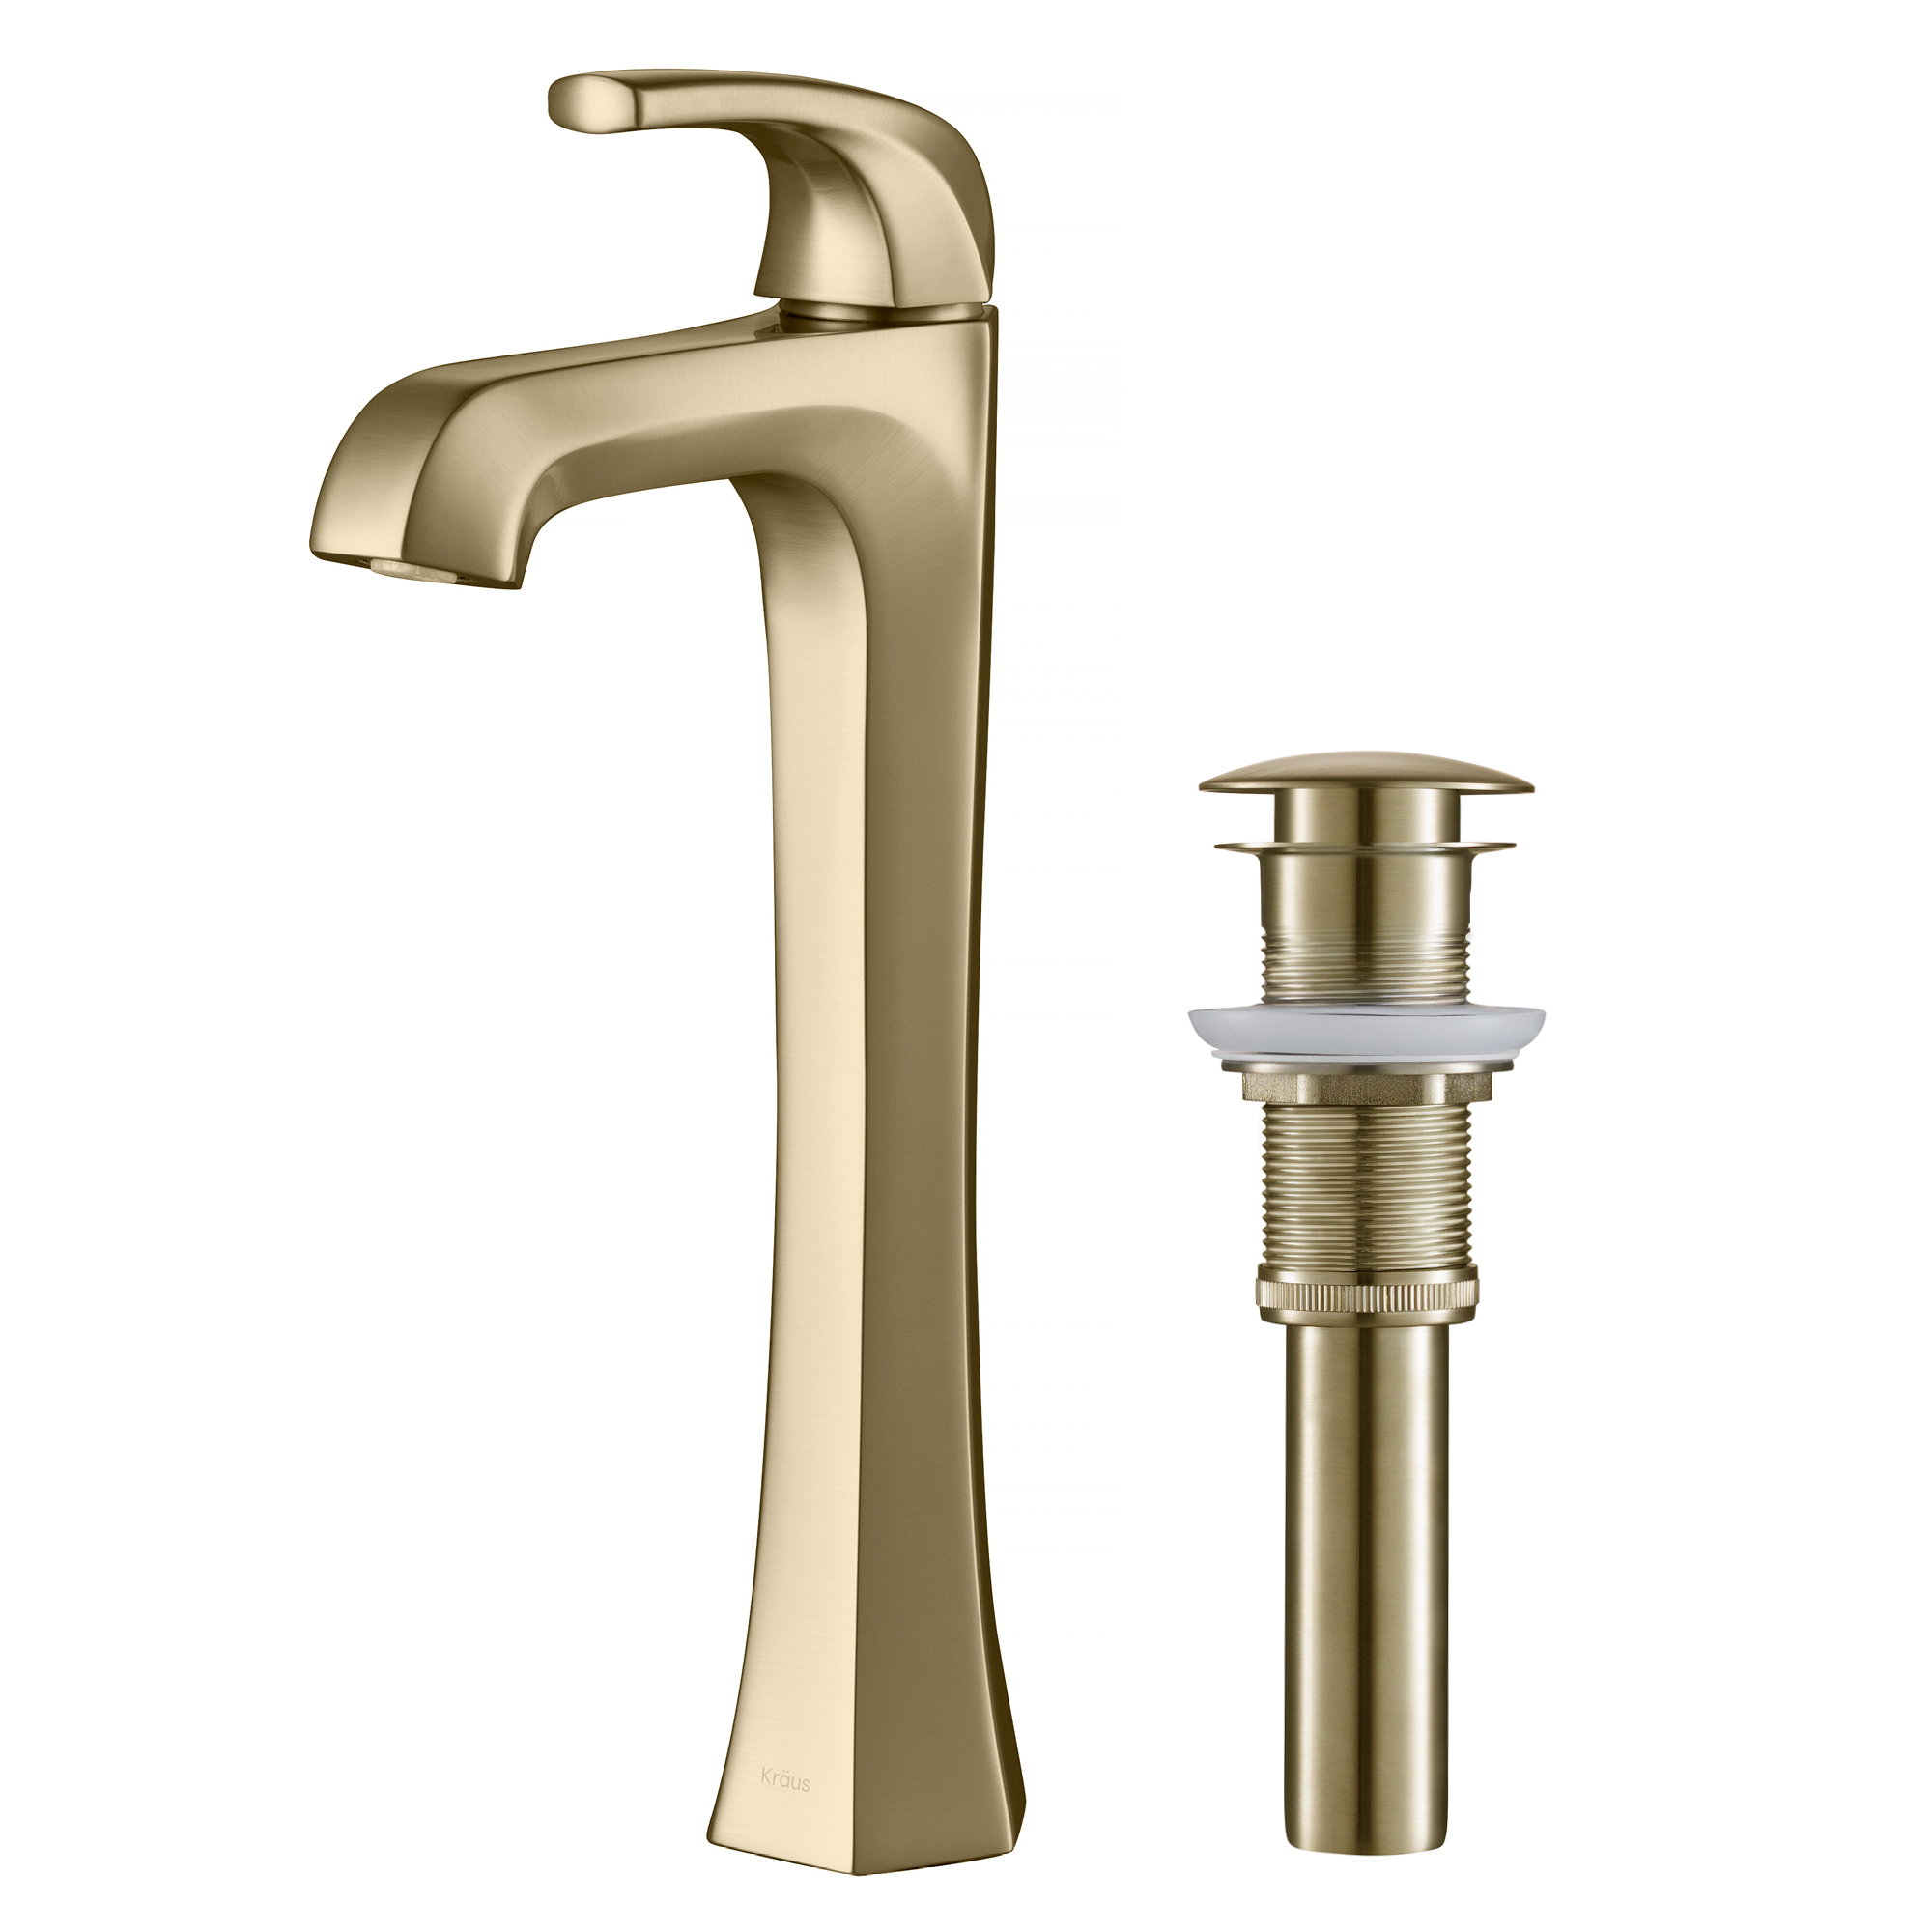 Kraus Kvf-1210bg Esta Single Handle Vessel Bathroom Faucet With Pop-up Drain - Brushed Gold